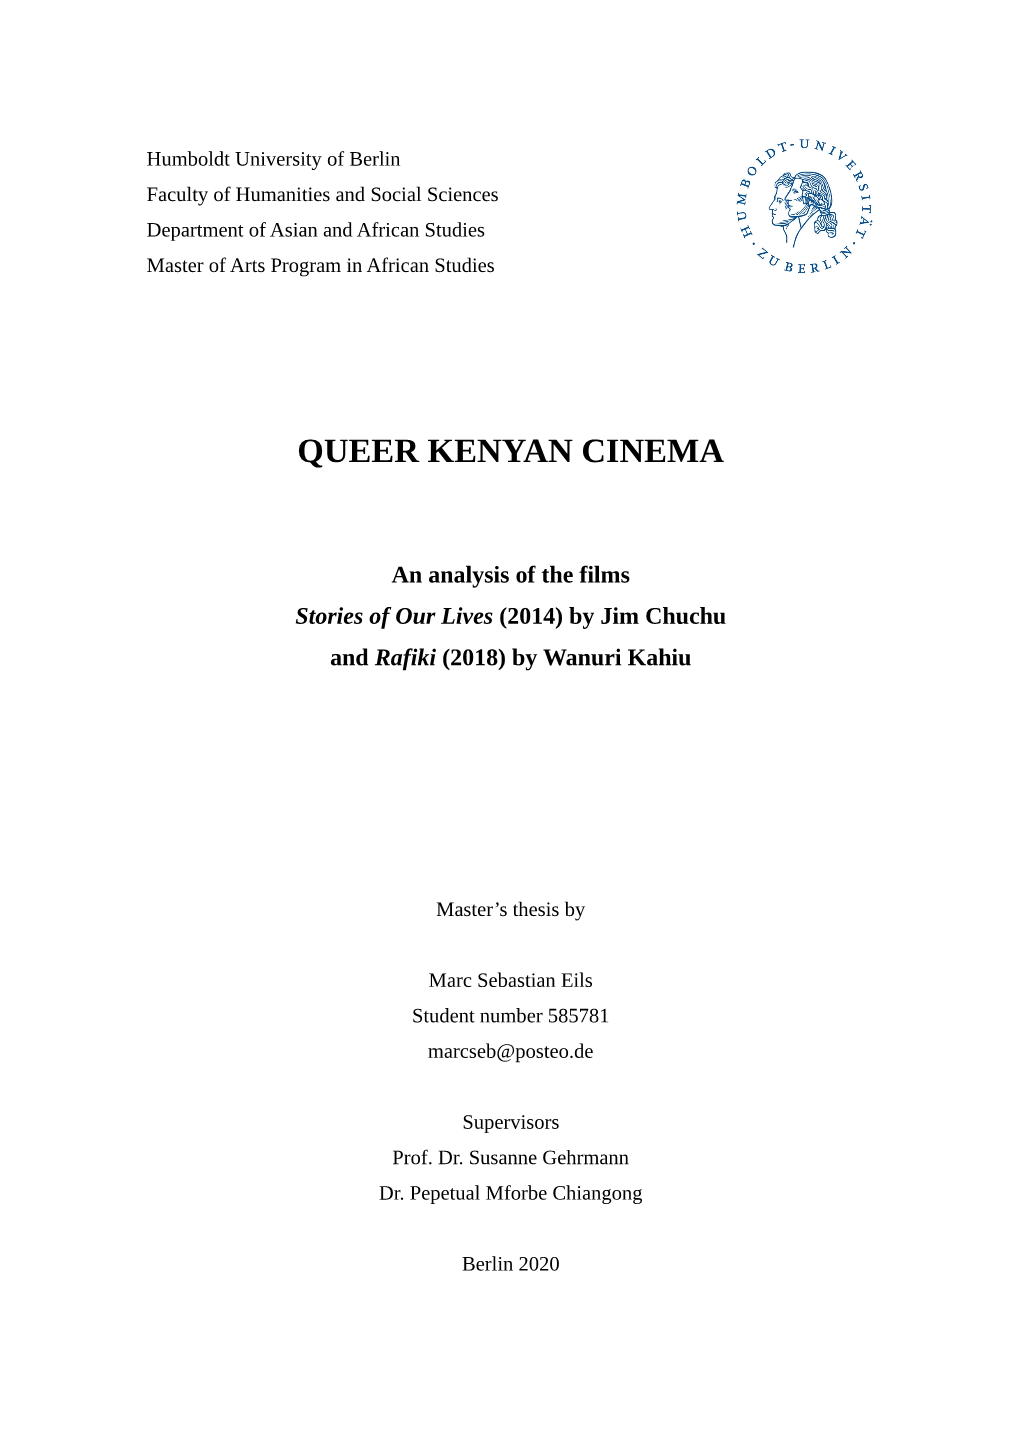 Queer Kenyan Cinema